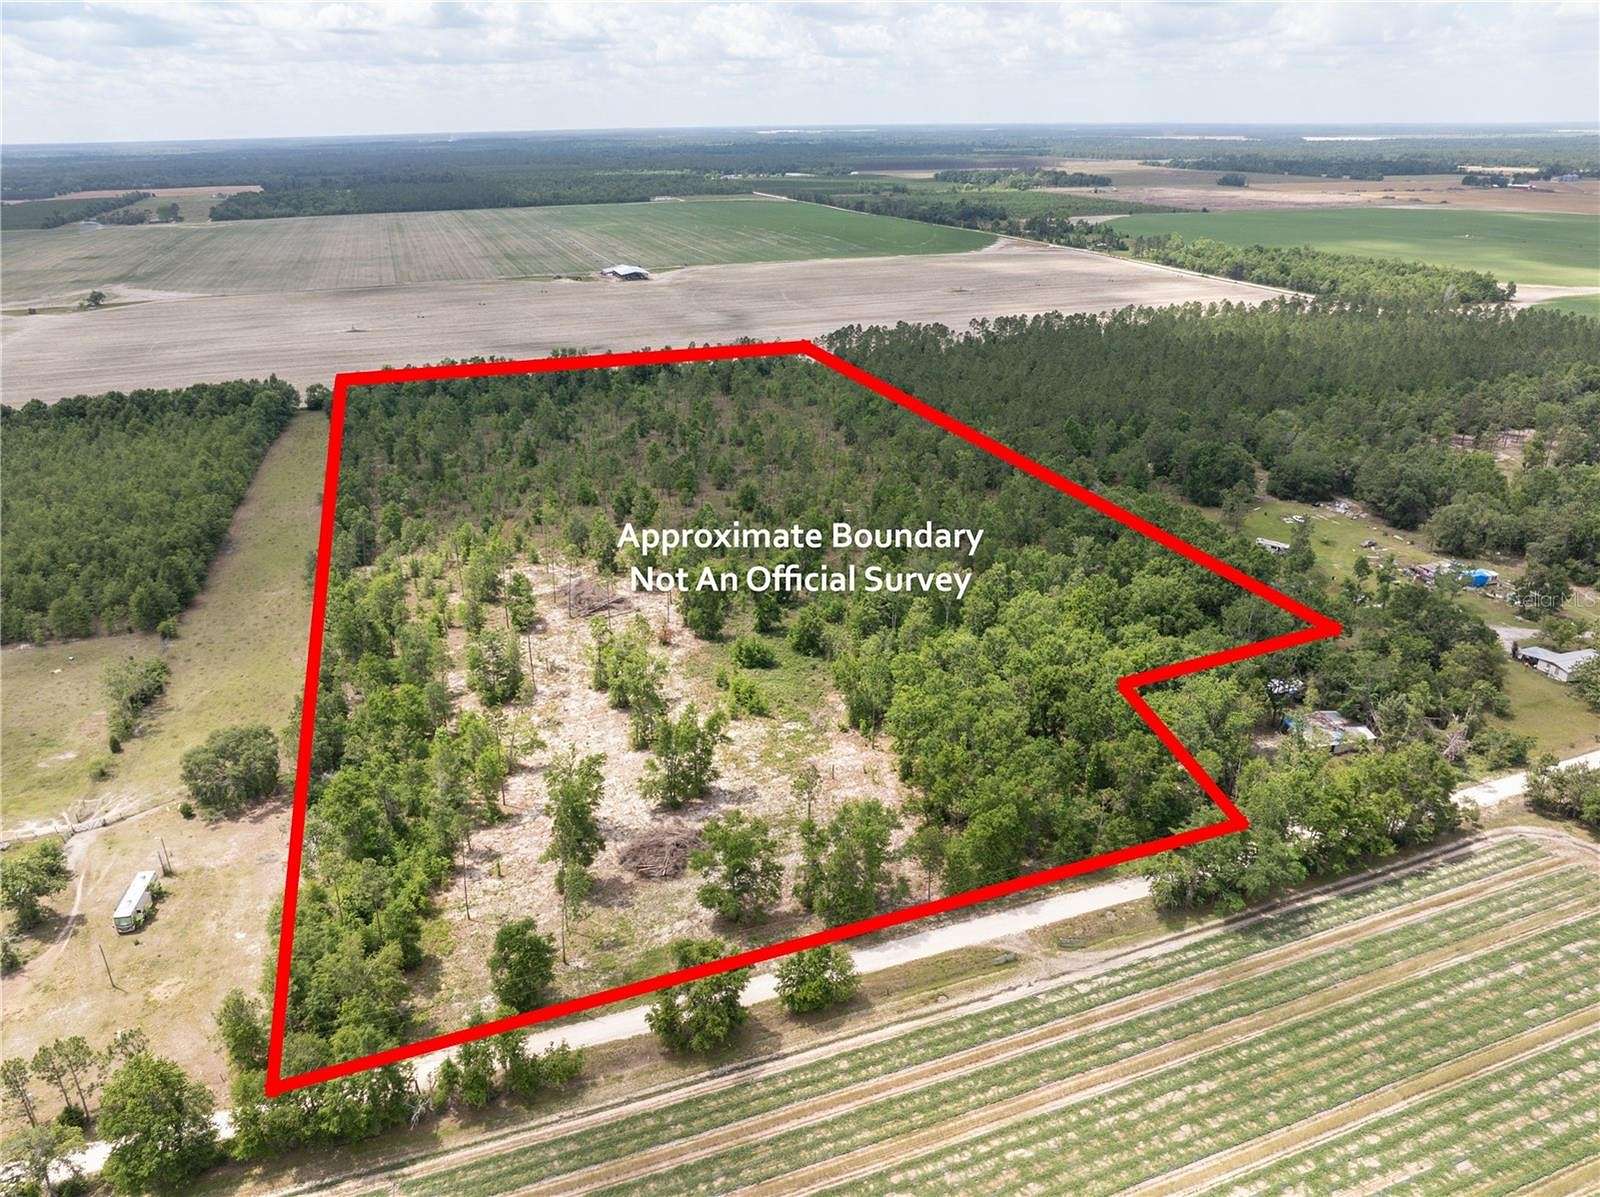 20 Acres of Land for Sale in Live Oak, Florida